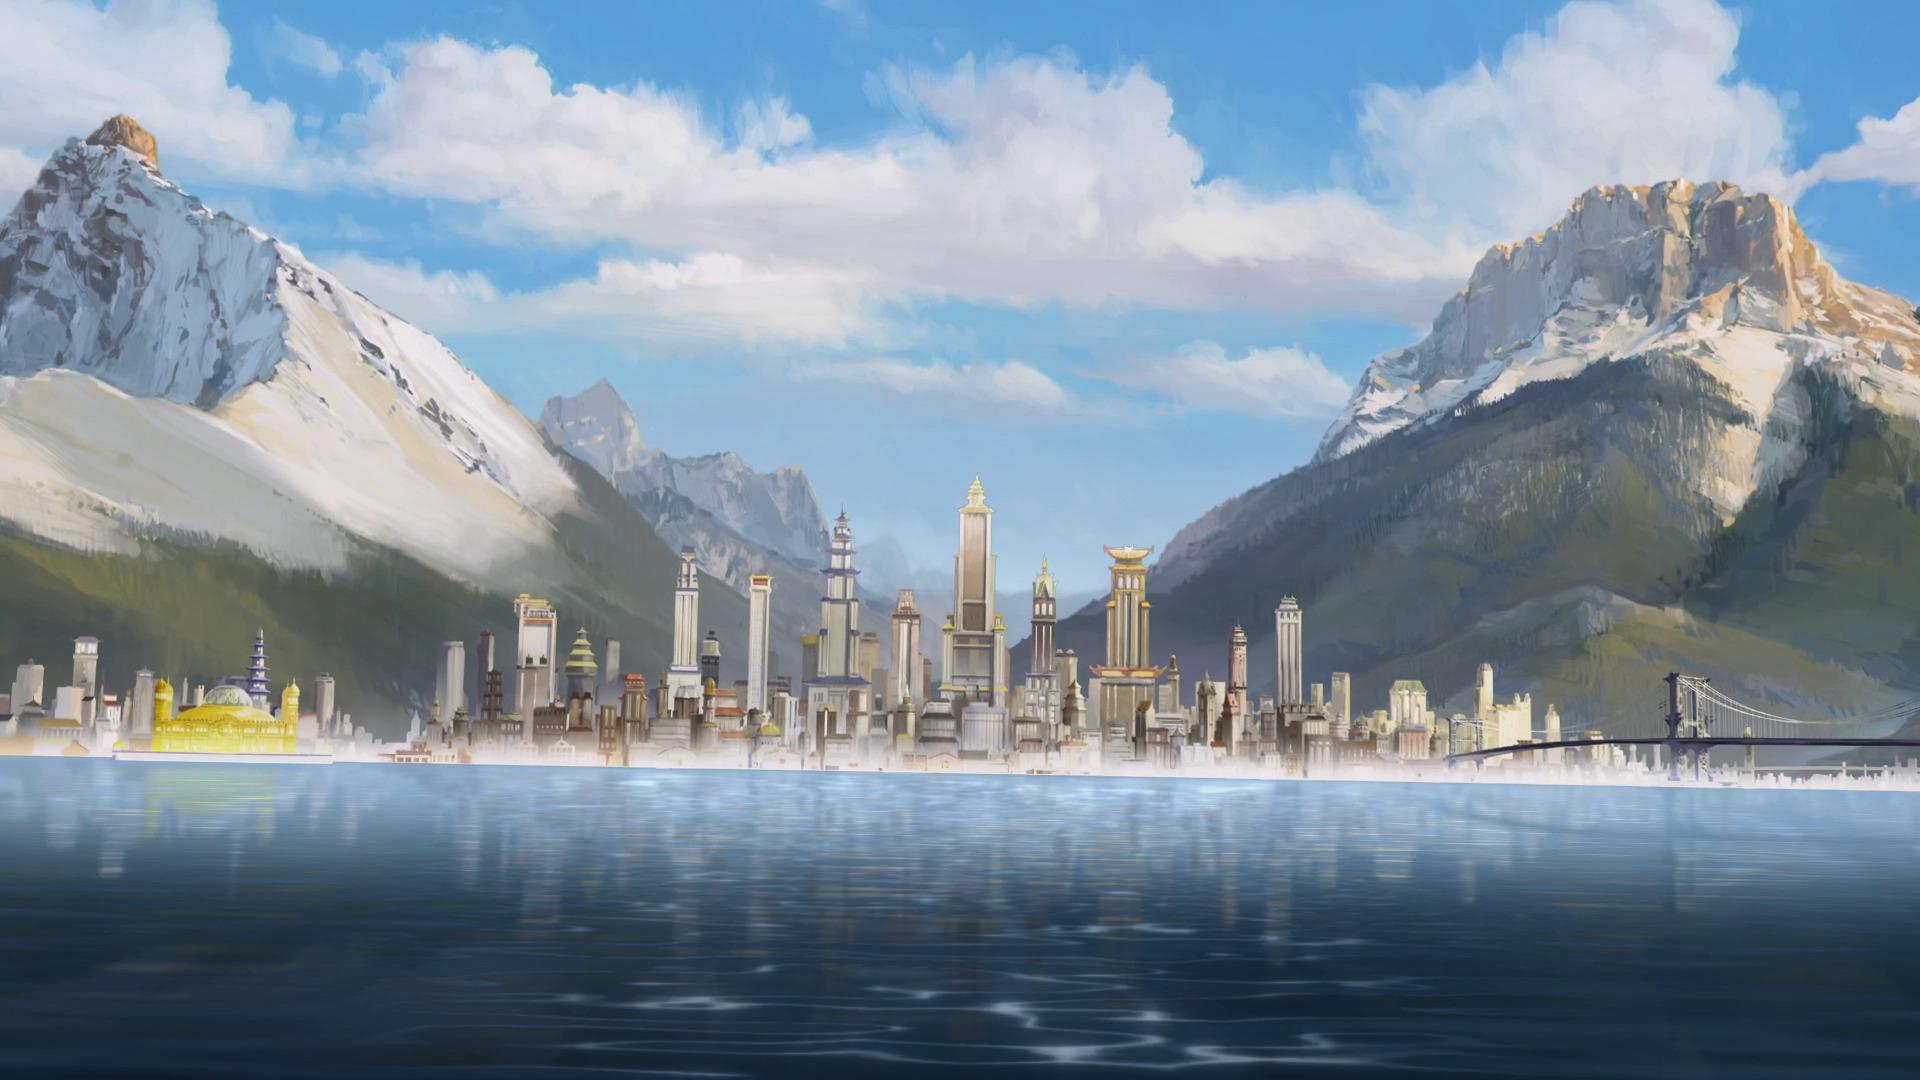 digital Art, Painting, Mountain, Lake, Bridge, Cityscape, Skyscraper, Snow, Clouds, Reflection, Avatar, Republic City, The Legend Of Korra Wallpaper